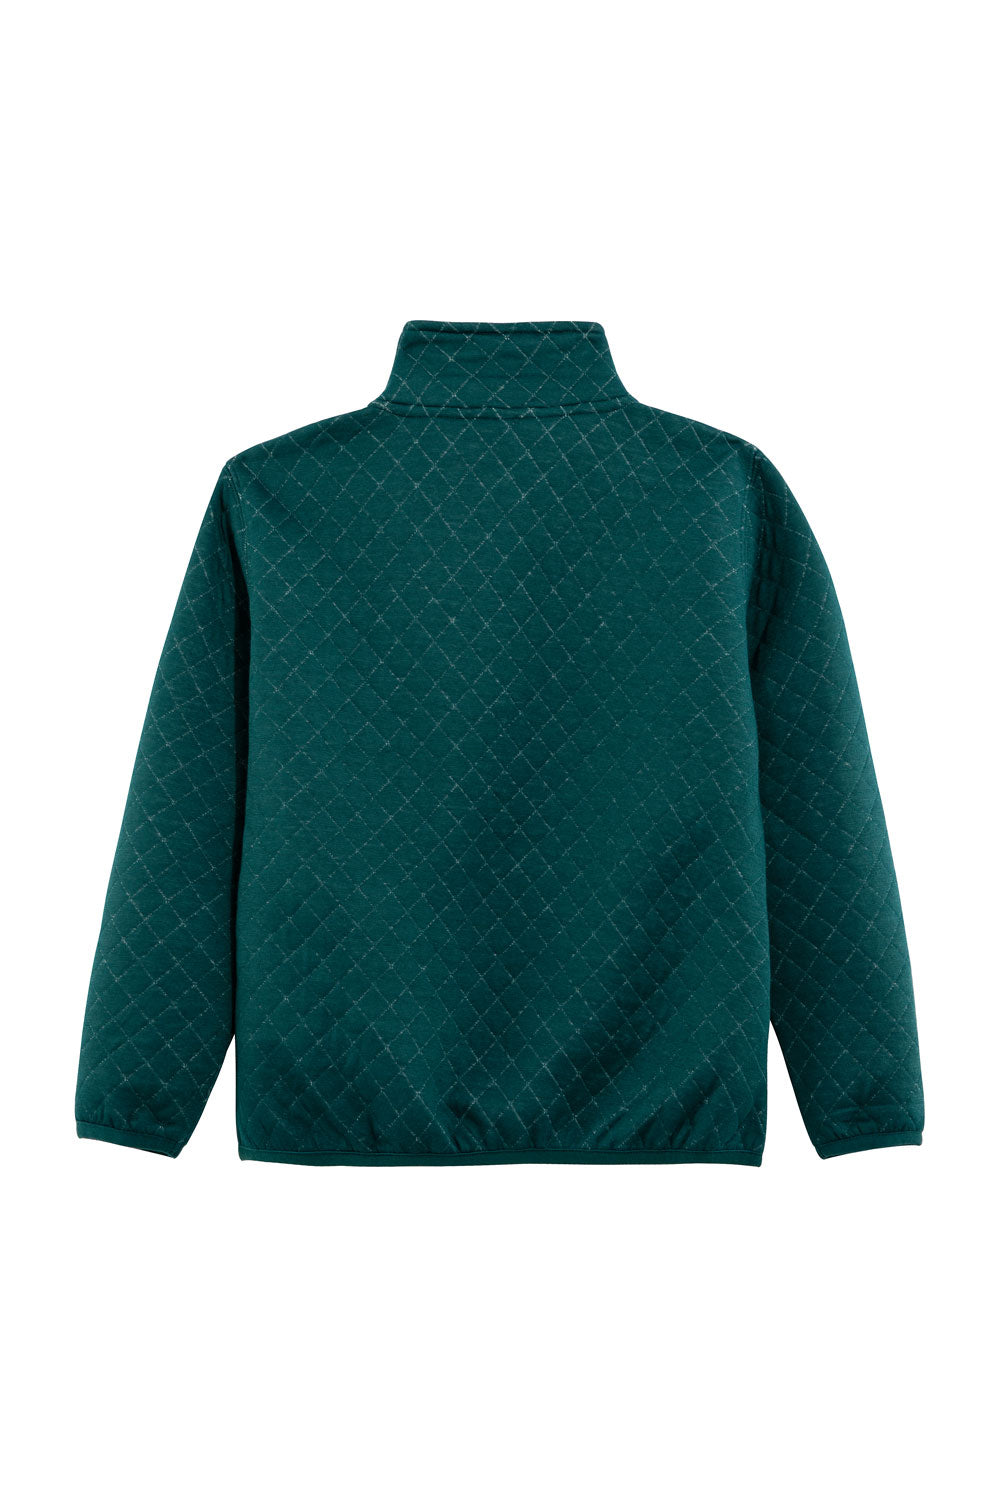 Kids Ultra Soft Quilted 1/4 Snap Fleece Pullover Mountain Outdoor Shirt